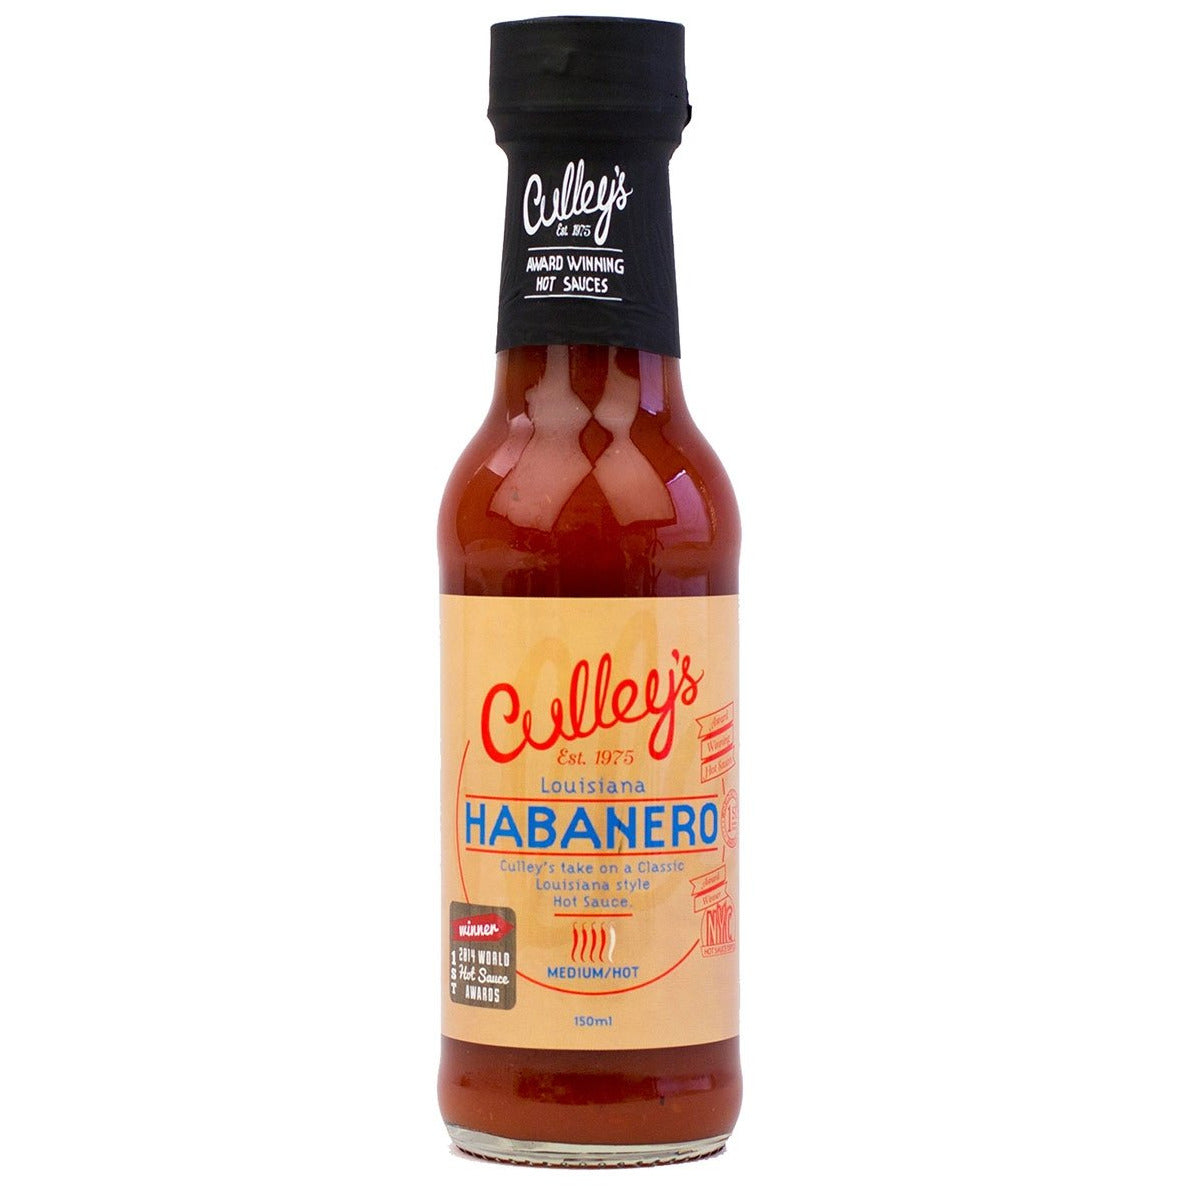 Culleys Louisiana Habanero Hot Sauce 150ml